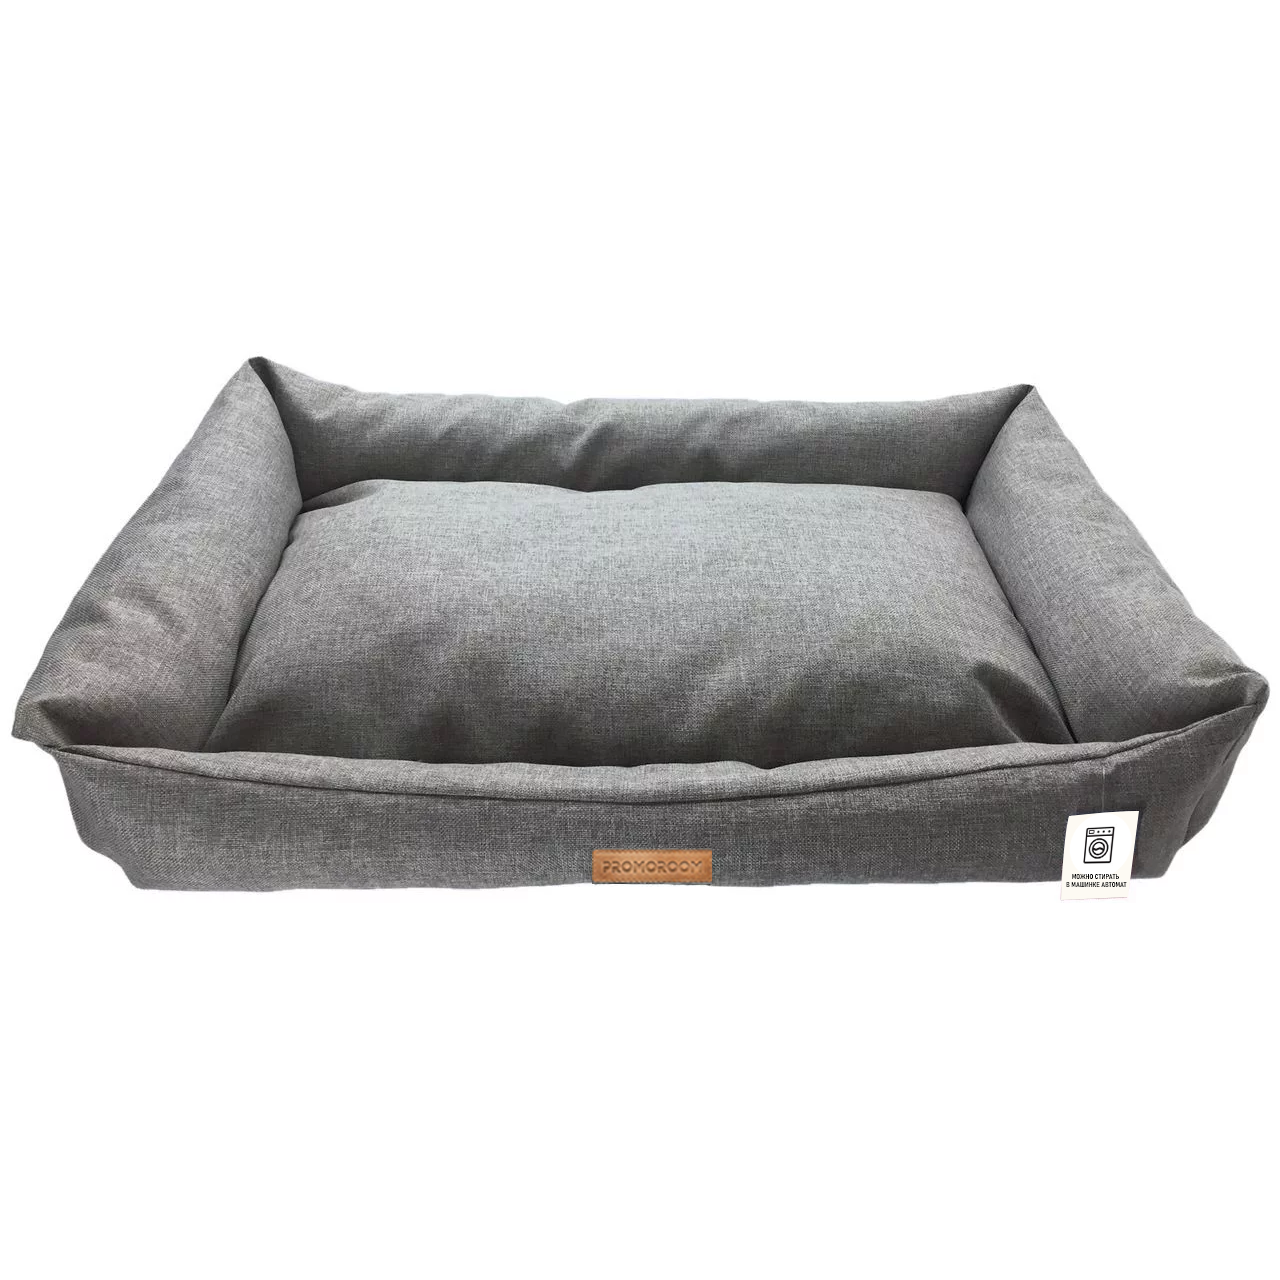 Лежанка для собаки PROMOROOM А-014 ортопедический серый диван, 110 х 80 х 25 см